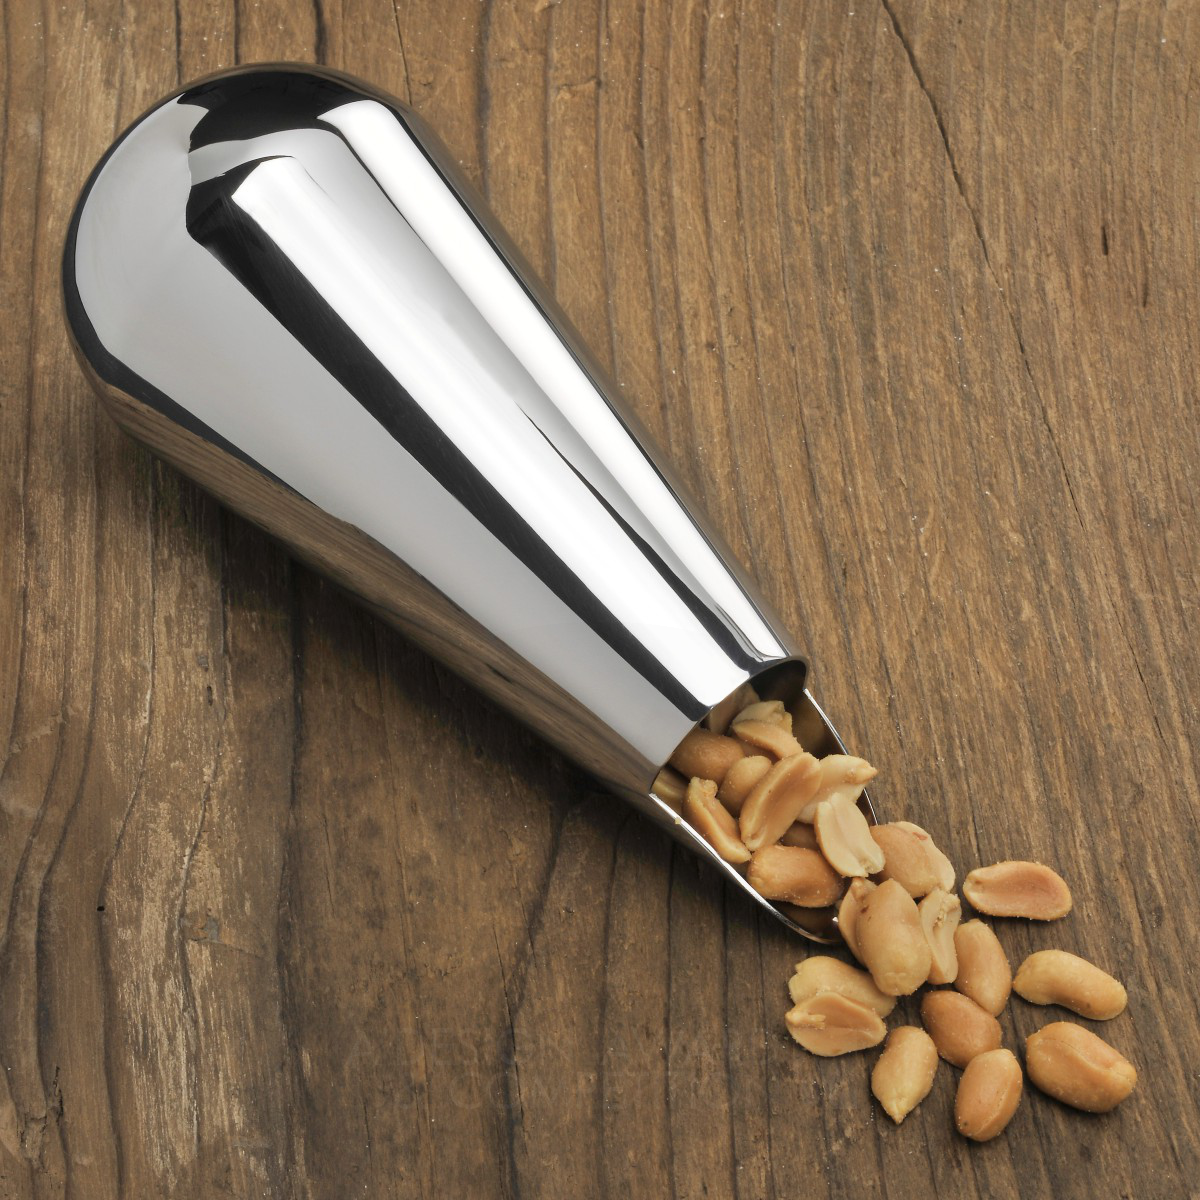 Erdnussschütte To get peanuts without touching themUniq by Mario Taepper